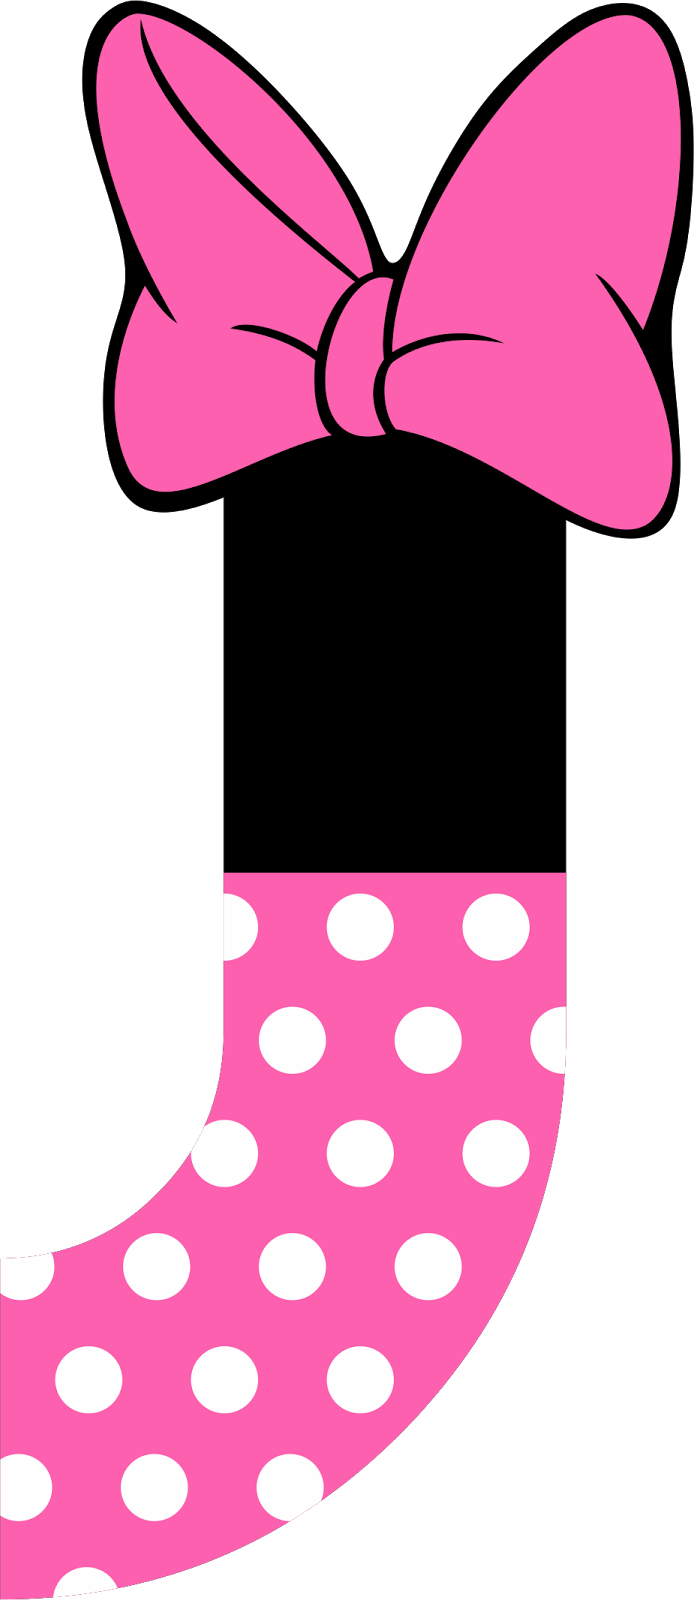 A Pink And White Polka Dot Sock